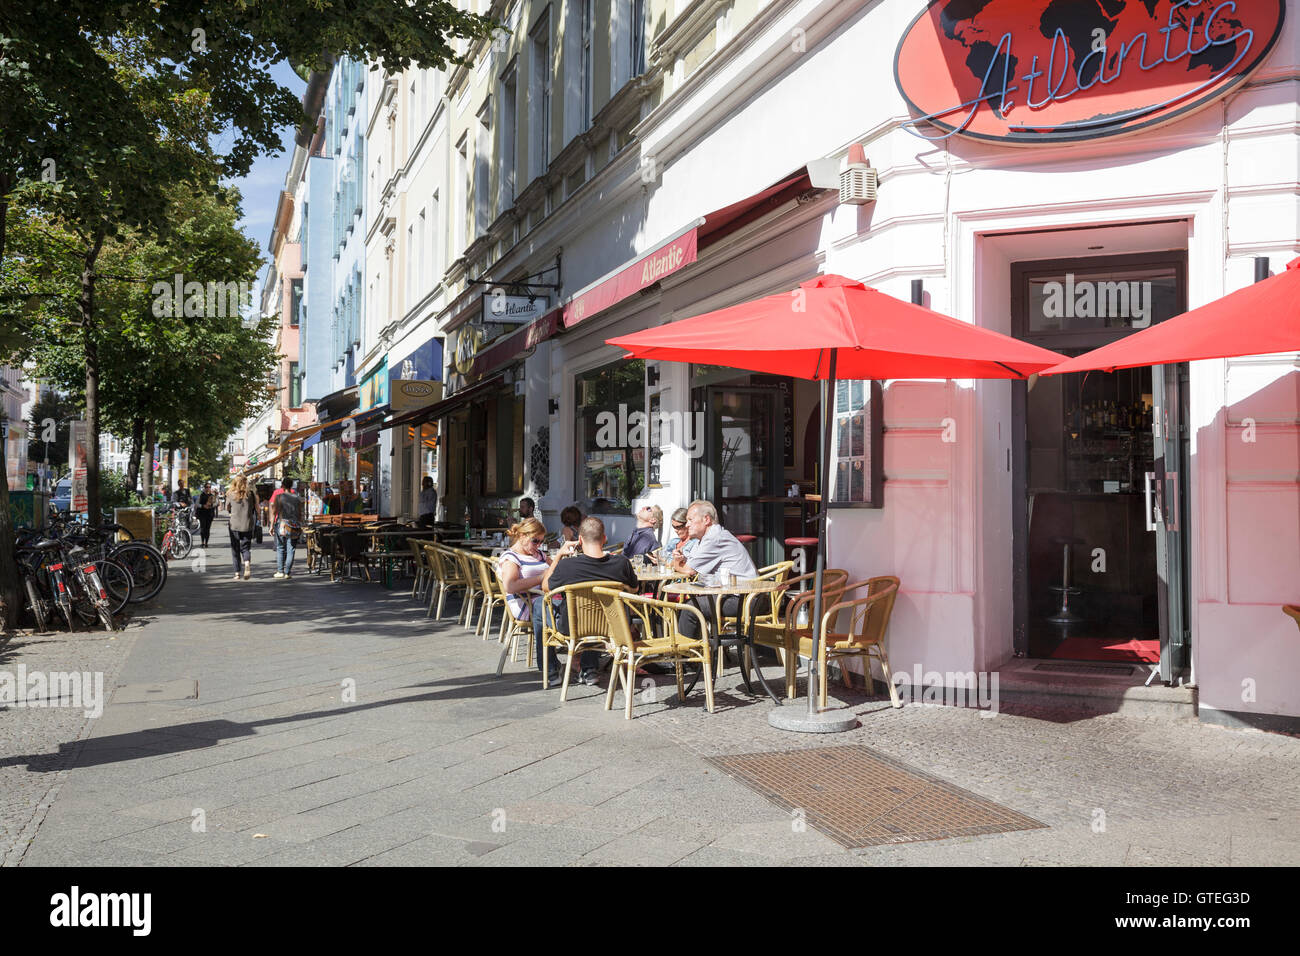 Bergmannstrasse in Kreuzberg people sitting outside cafe Atlantis, Berlin, Germany Stock Photo